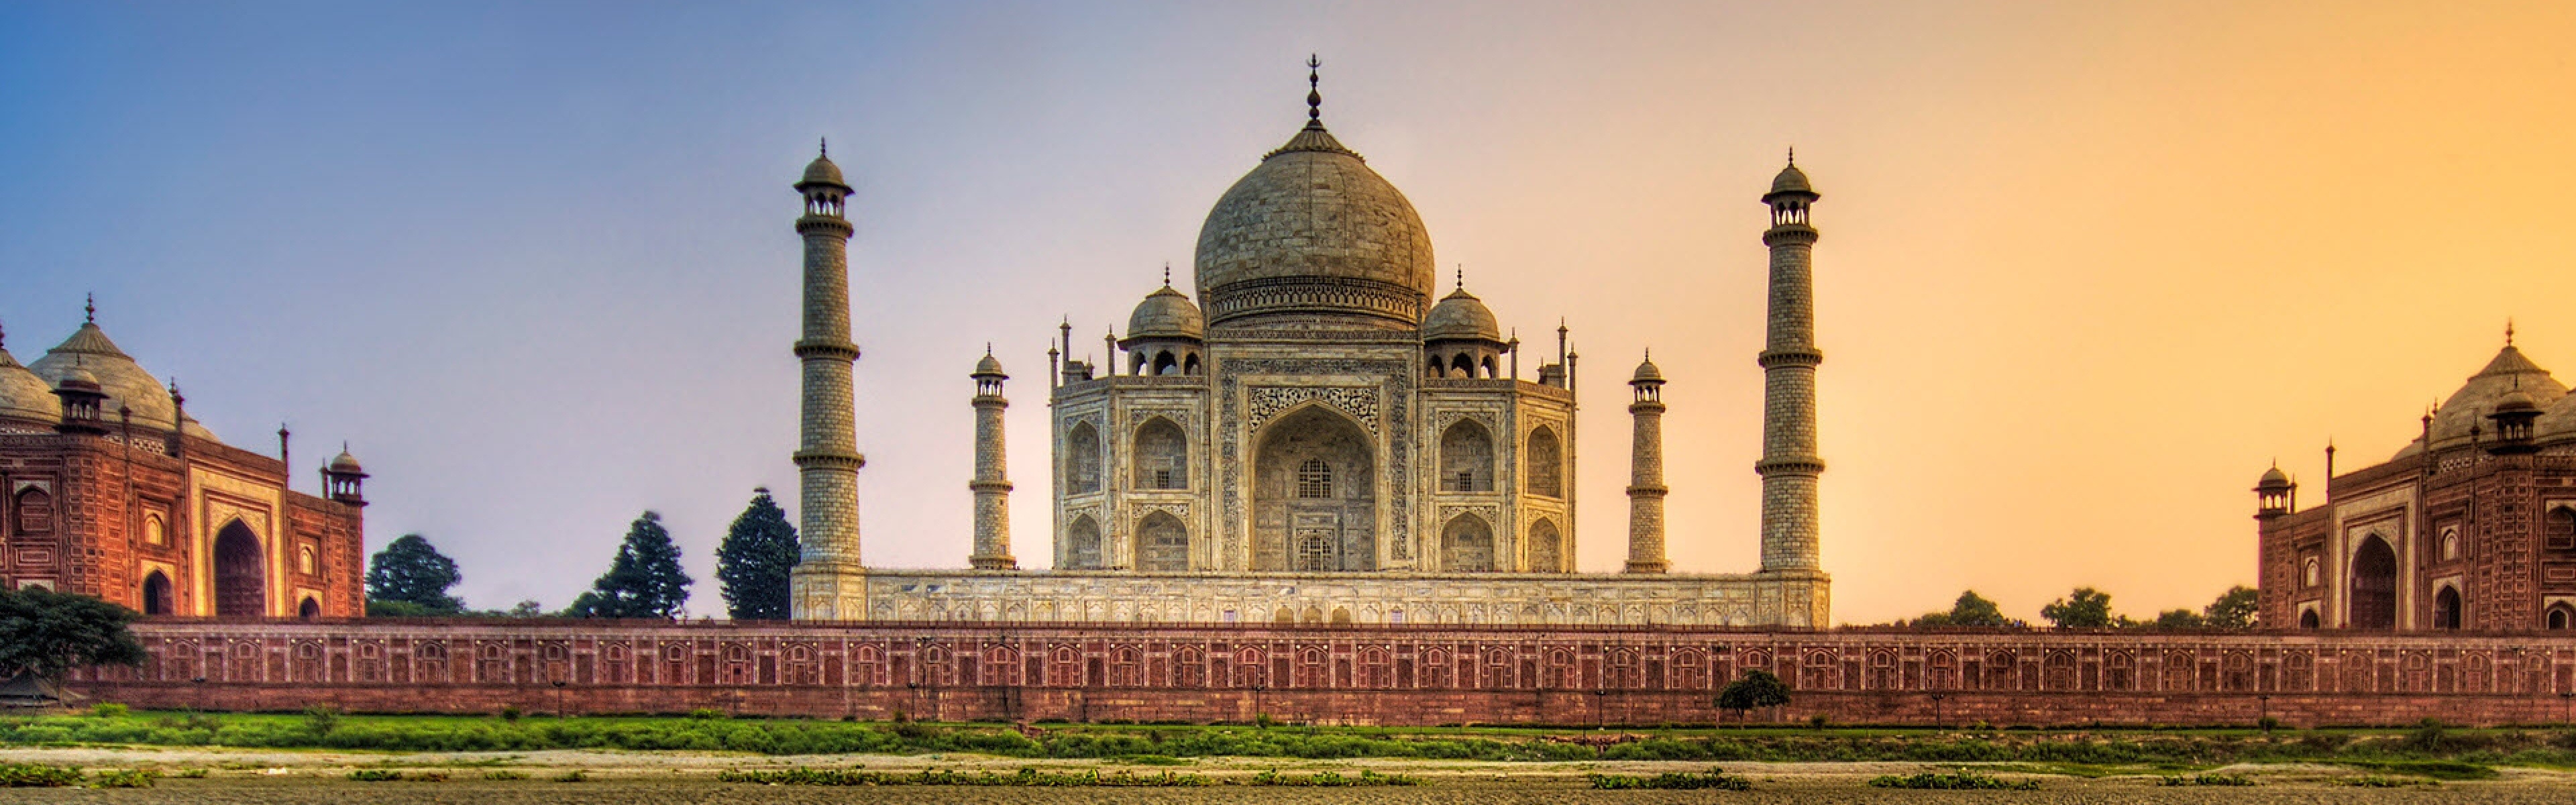 Taj Mahal, Timeless beauty, Mesmerizing architecture, Coworking space inspiration, 3840x1200 Dual Screen Desktop